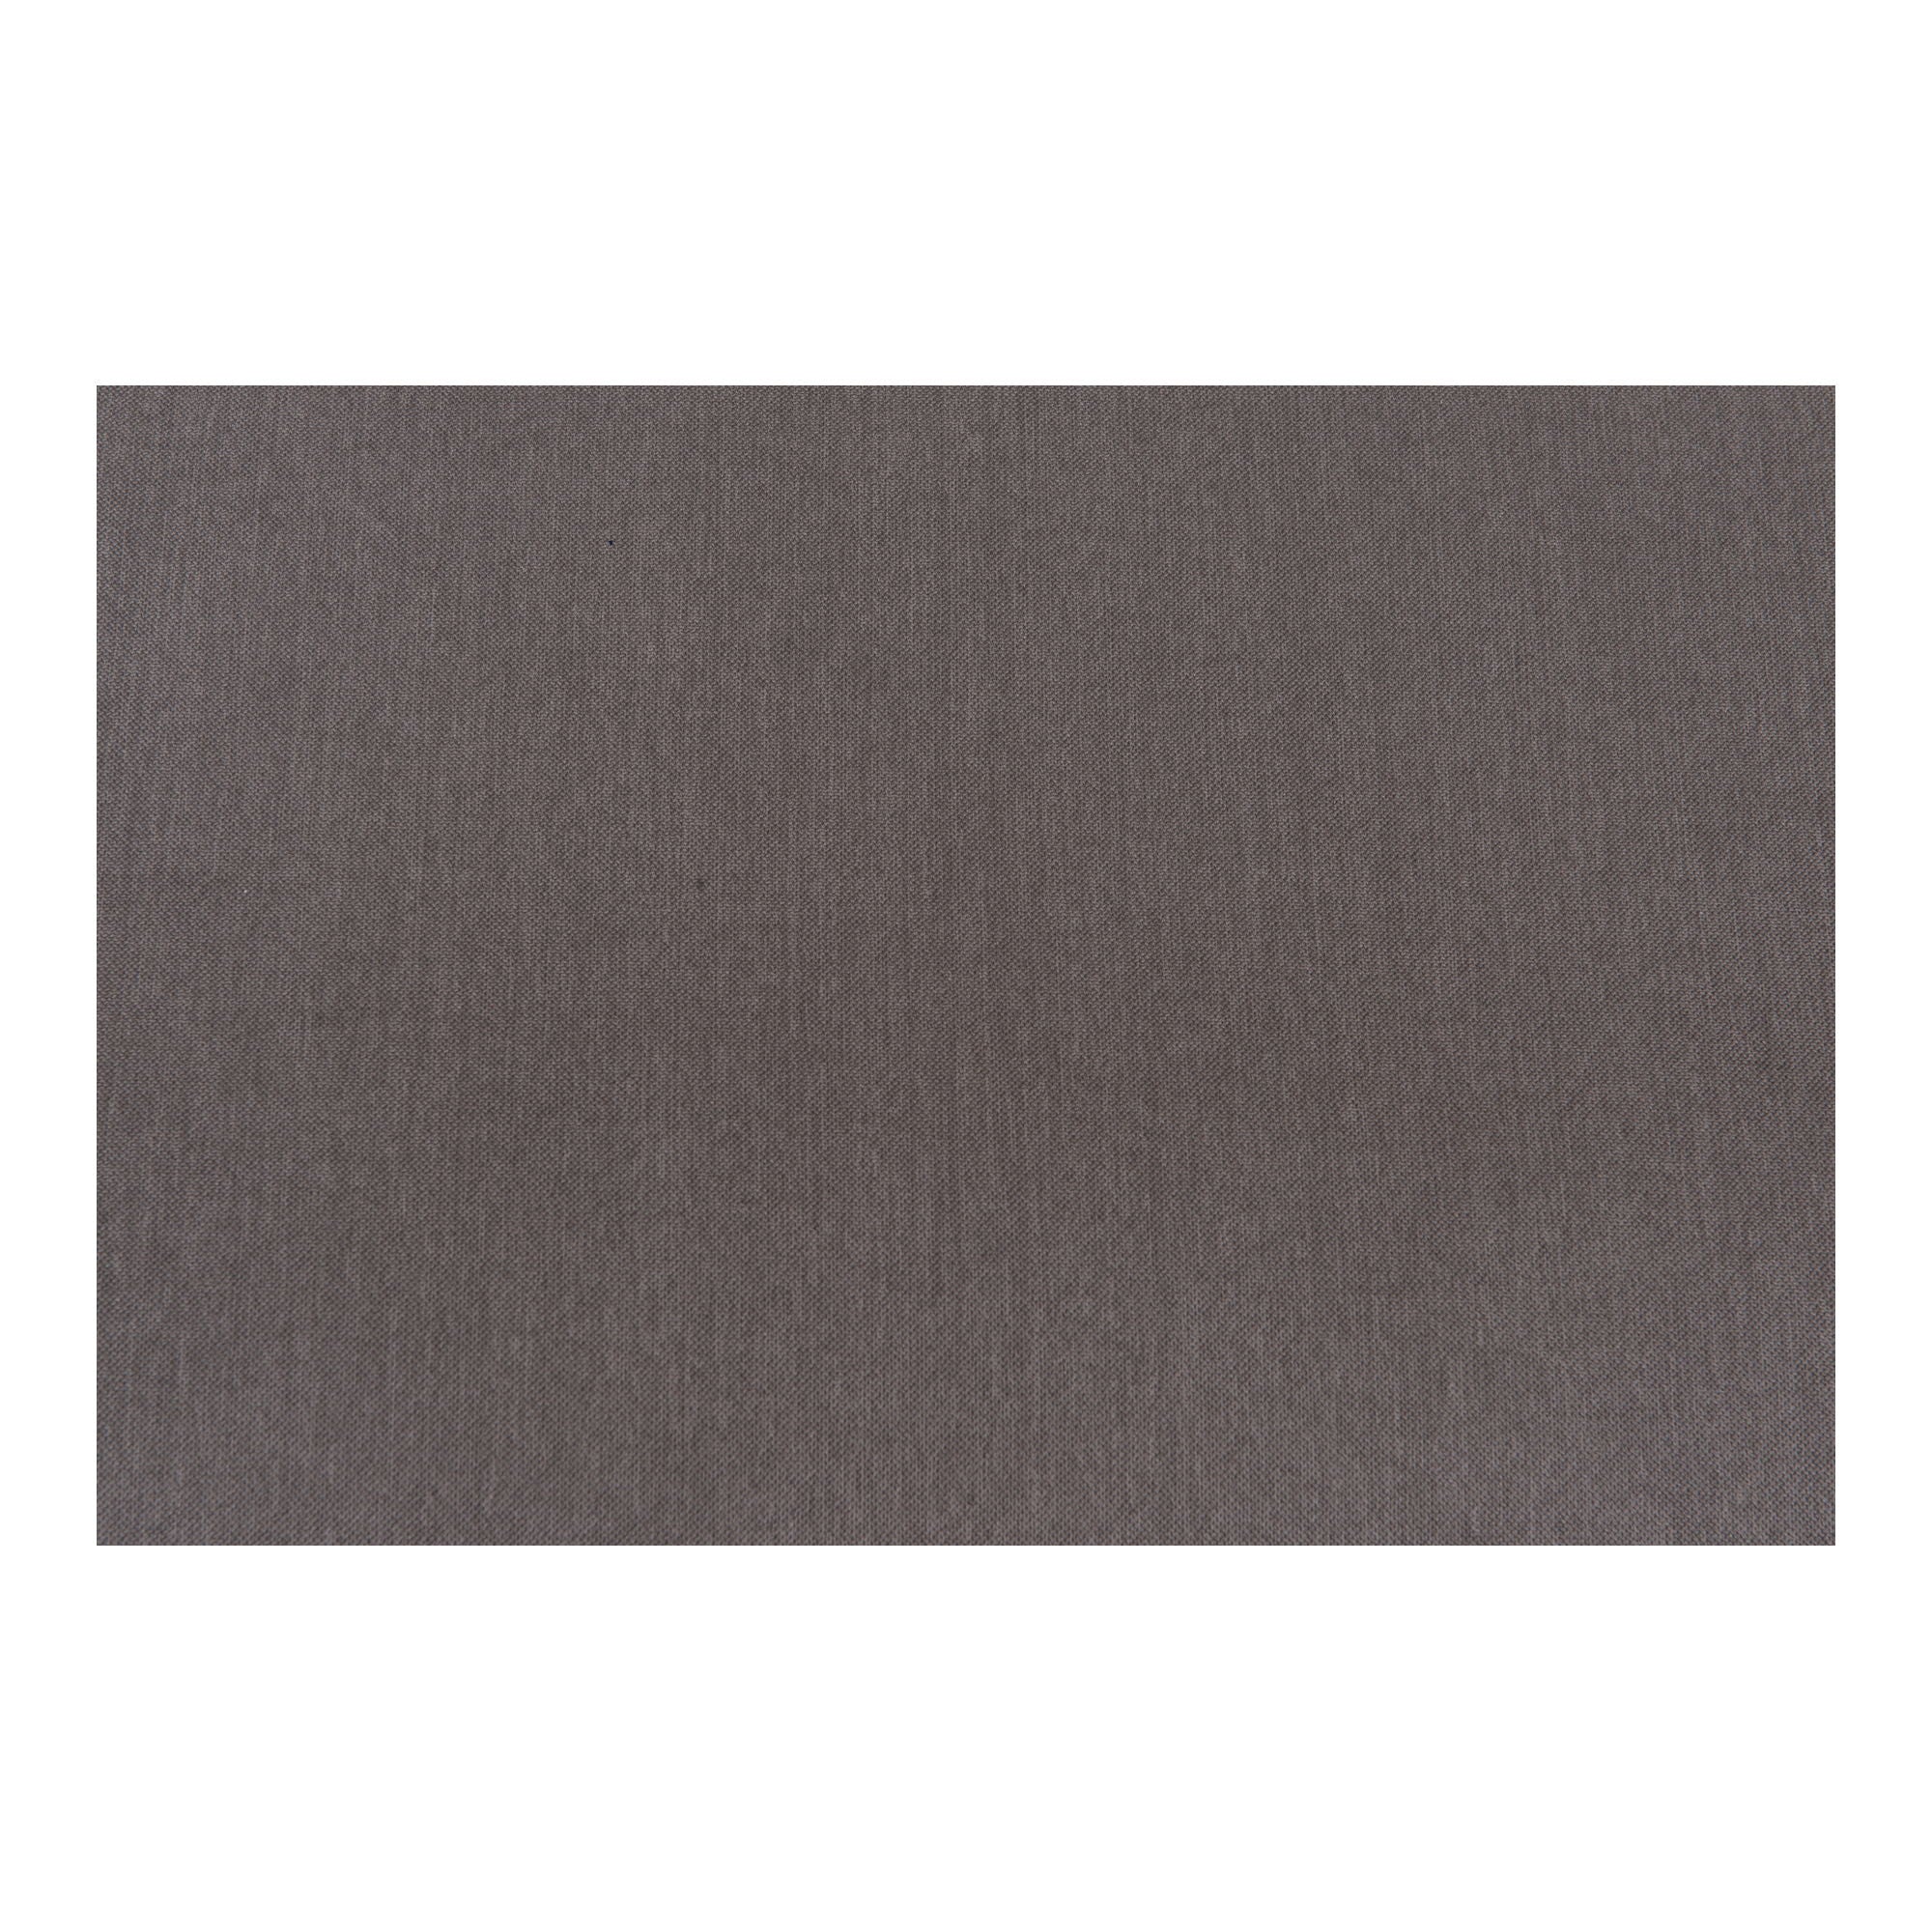 Clay - Ottoman Livesmart Fabric - Light Gray